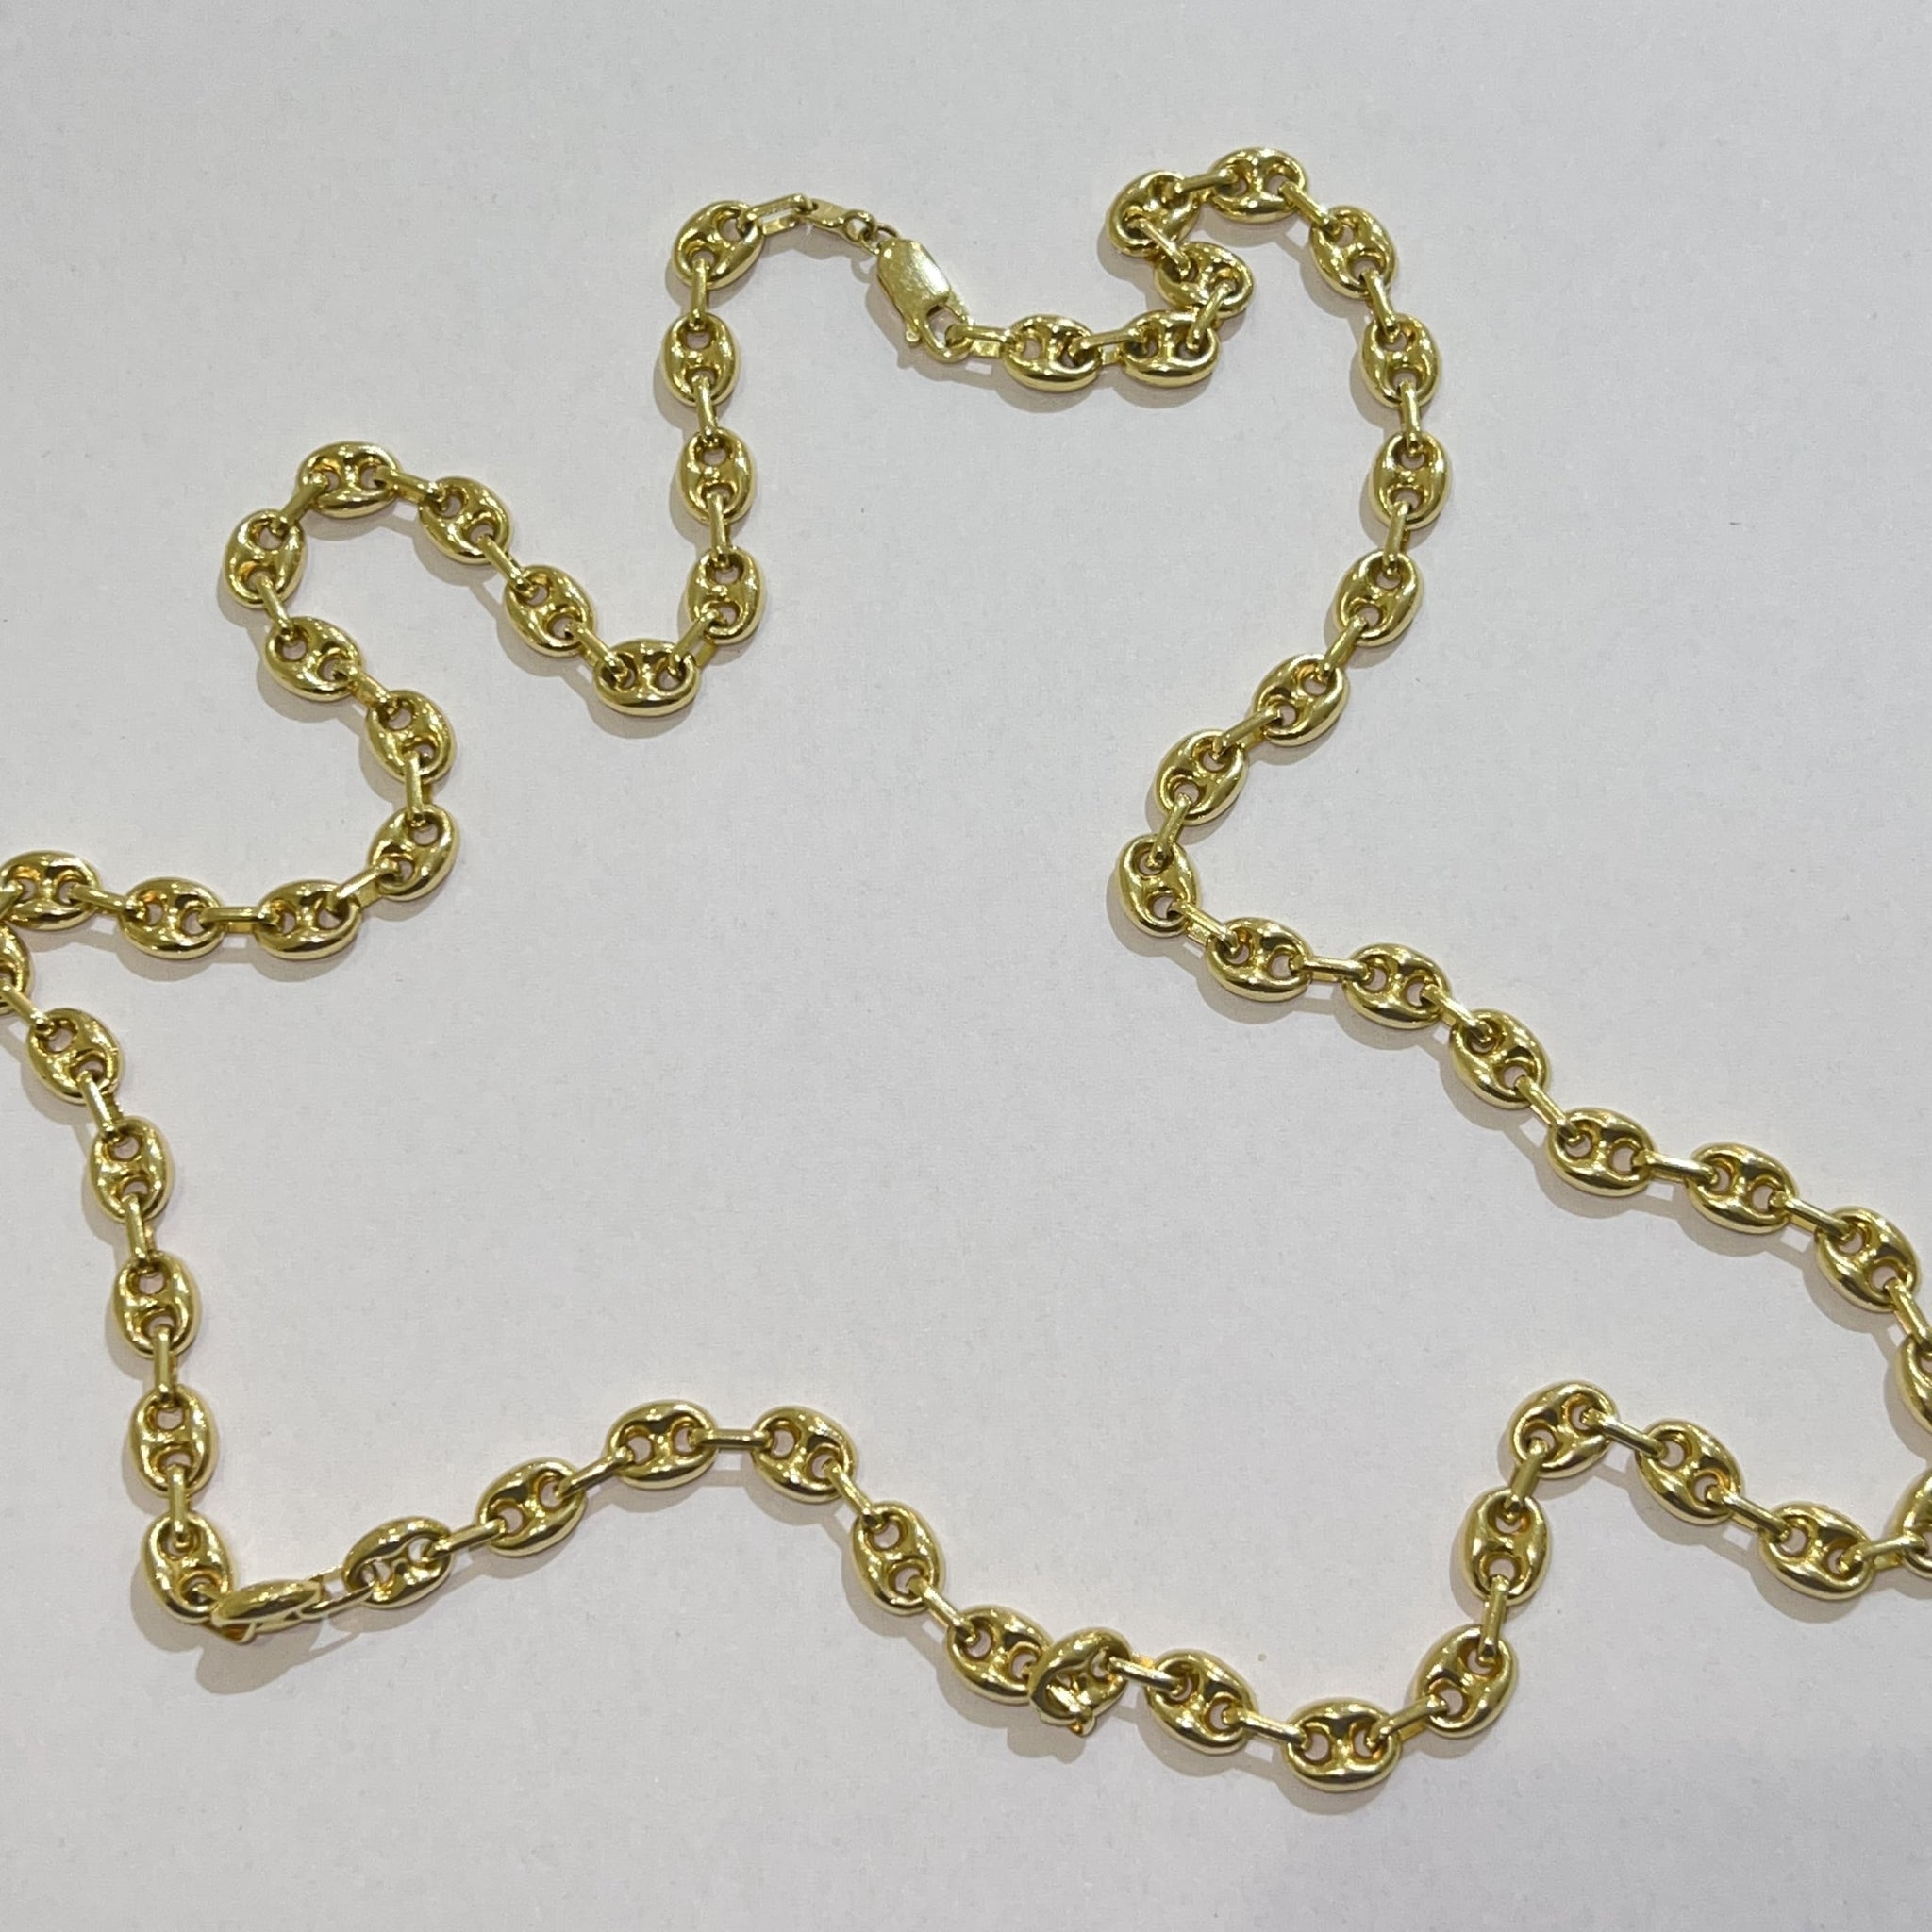 Gucci Link - 14 carat gold - 60cm / 6.2mm